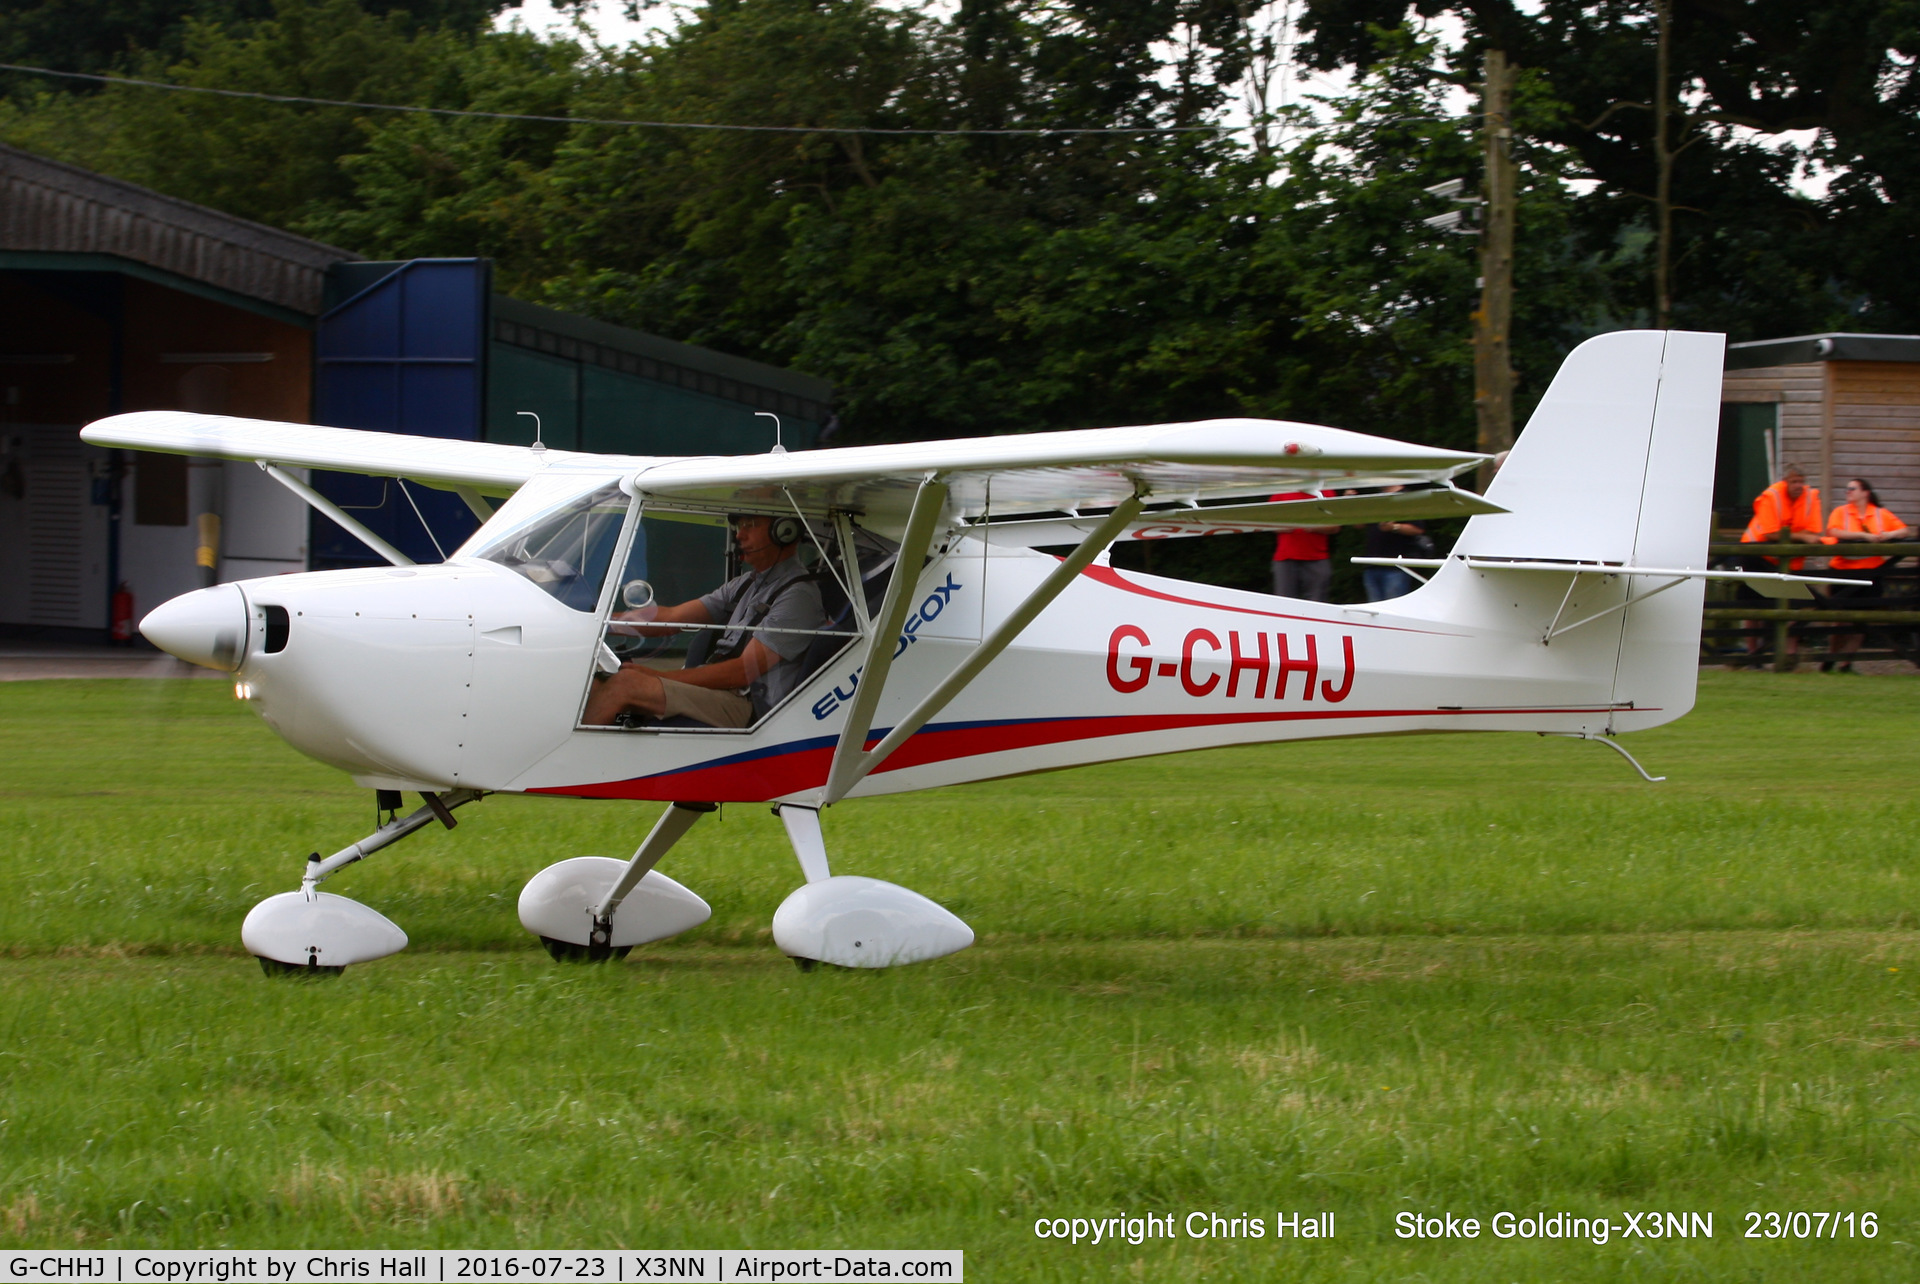 G-CHHJ, 2012 Aeropro Eurofox 912(1) C/N BMAA/HB/625, Stoke Golding Stakeout 2016